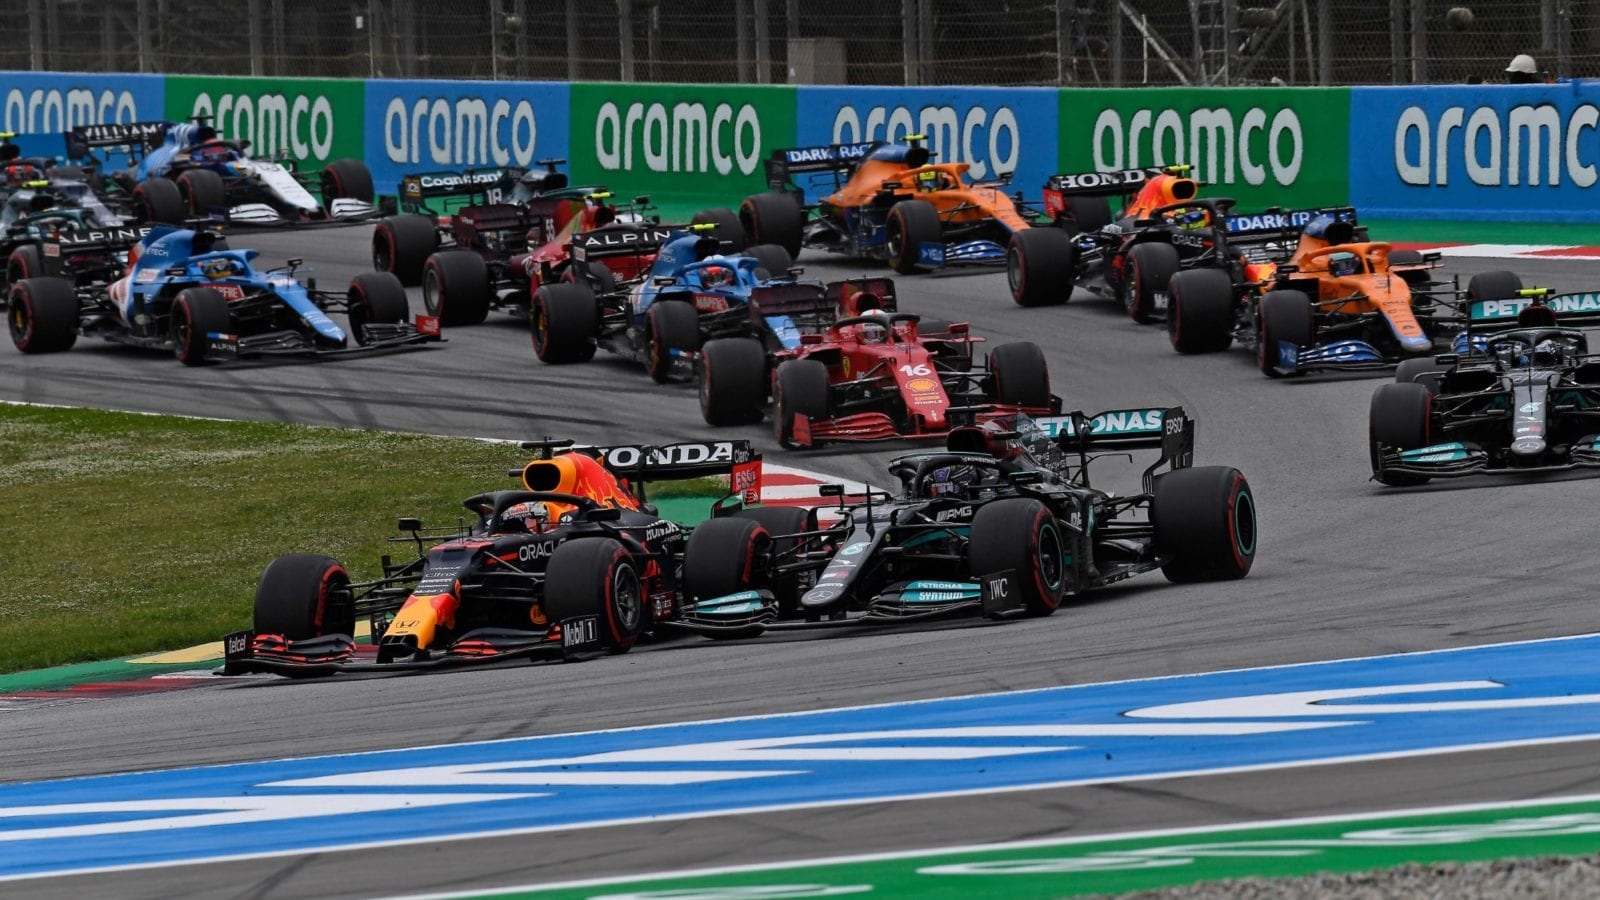 2021 Spanish GP, Lewis Hamilton and Max Verstappen